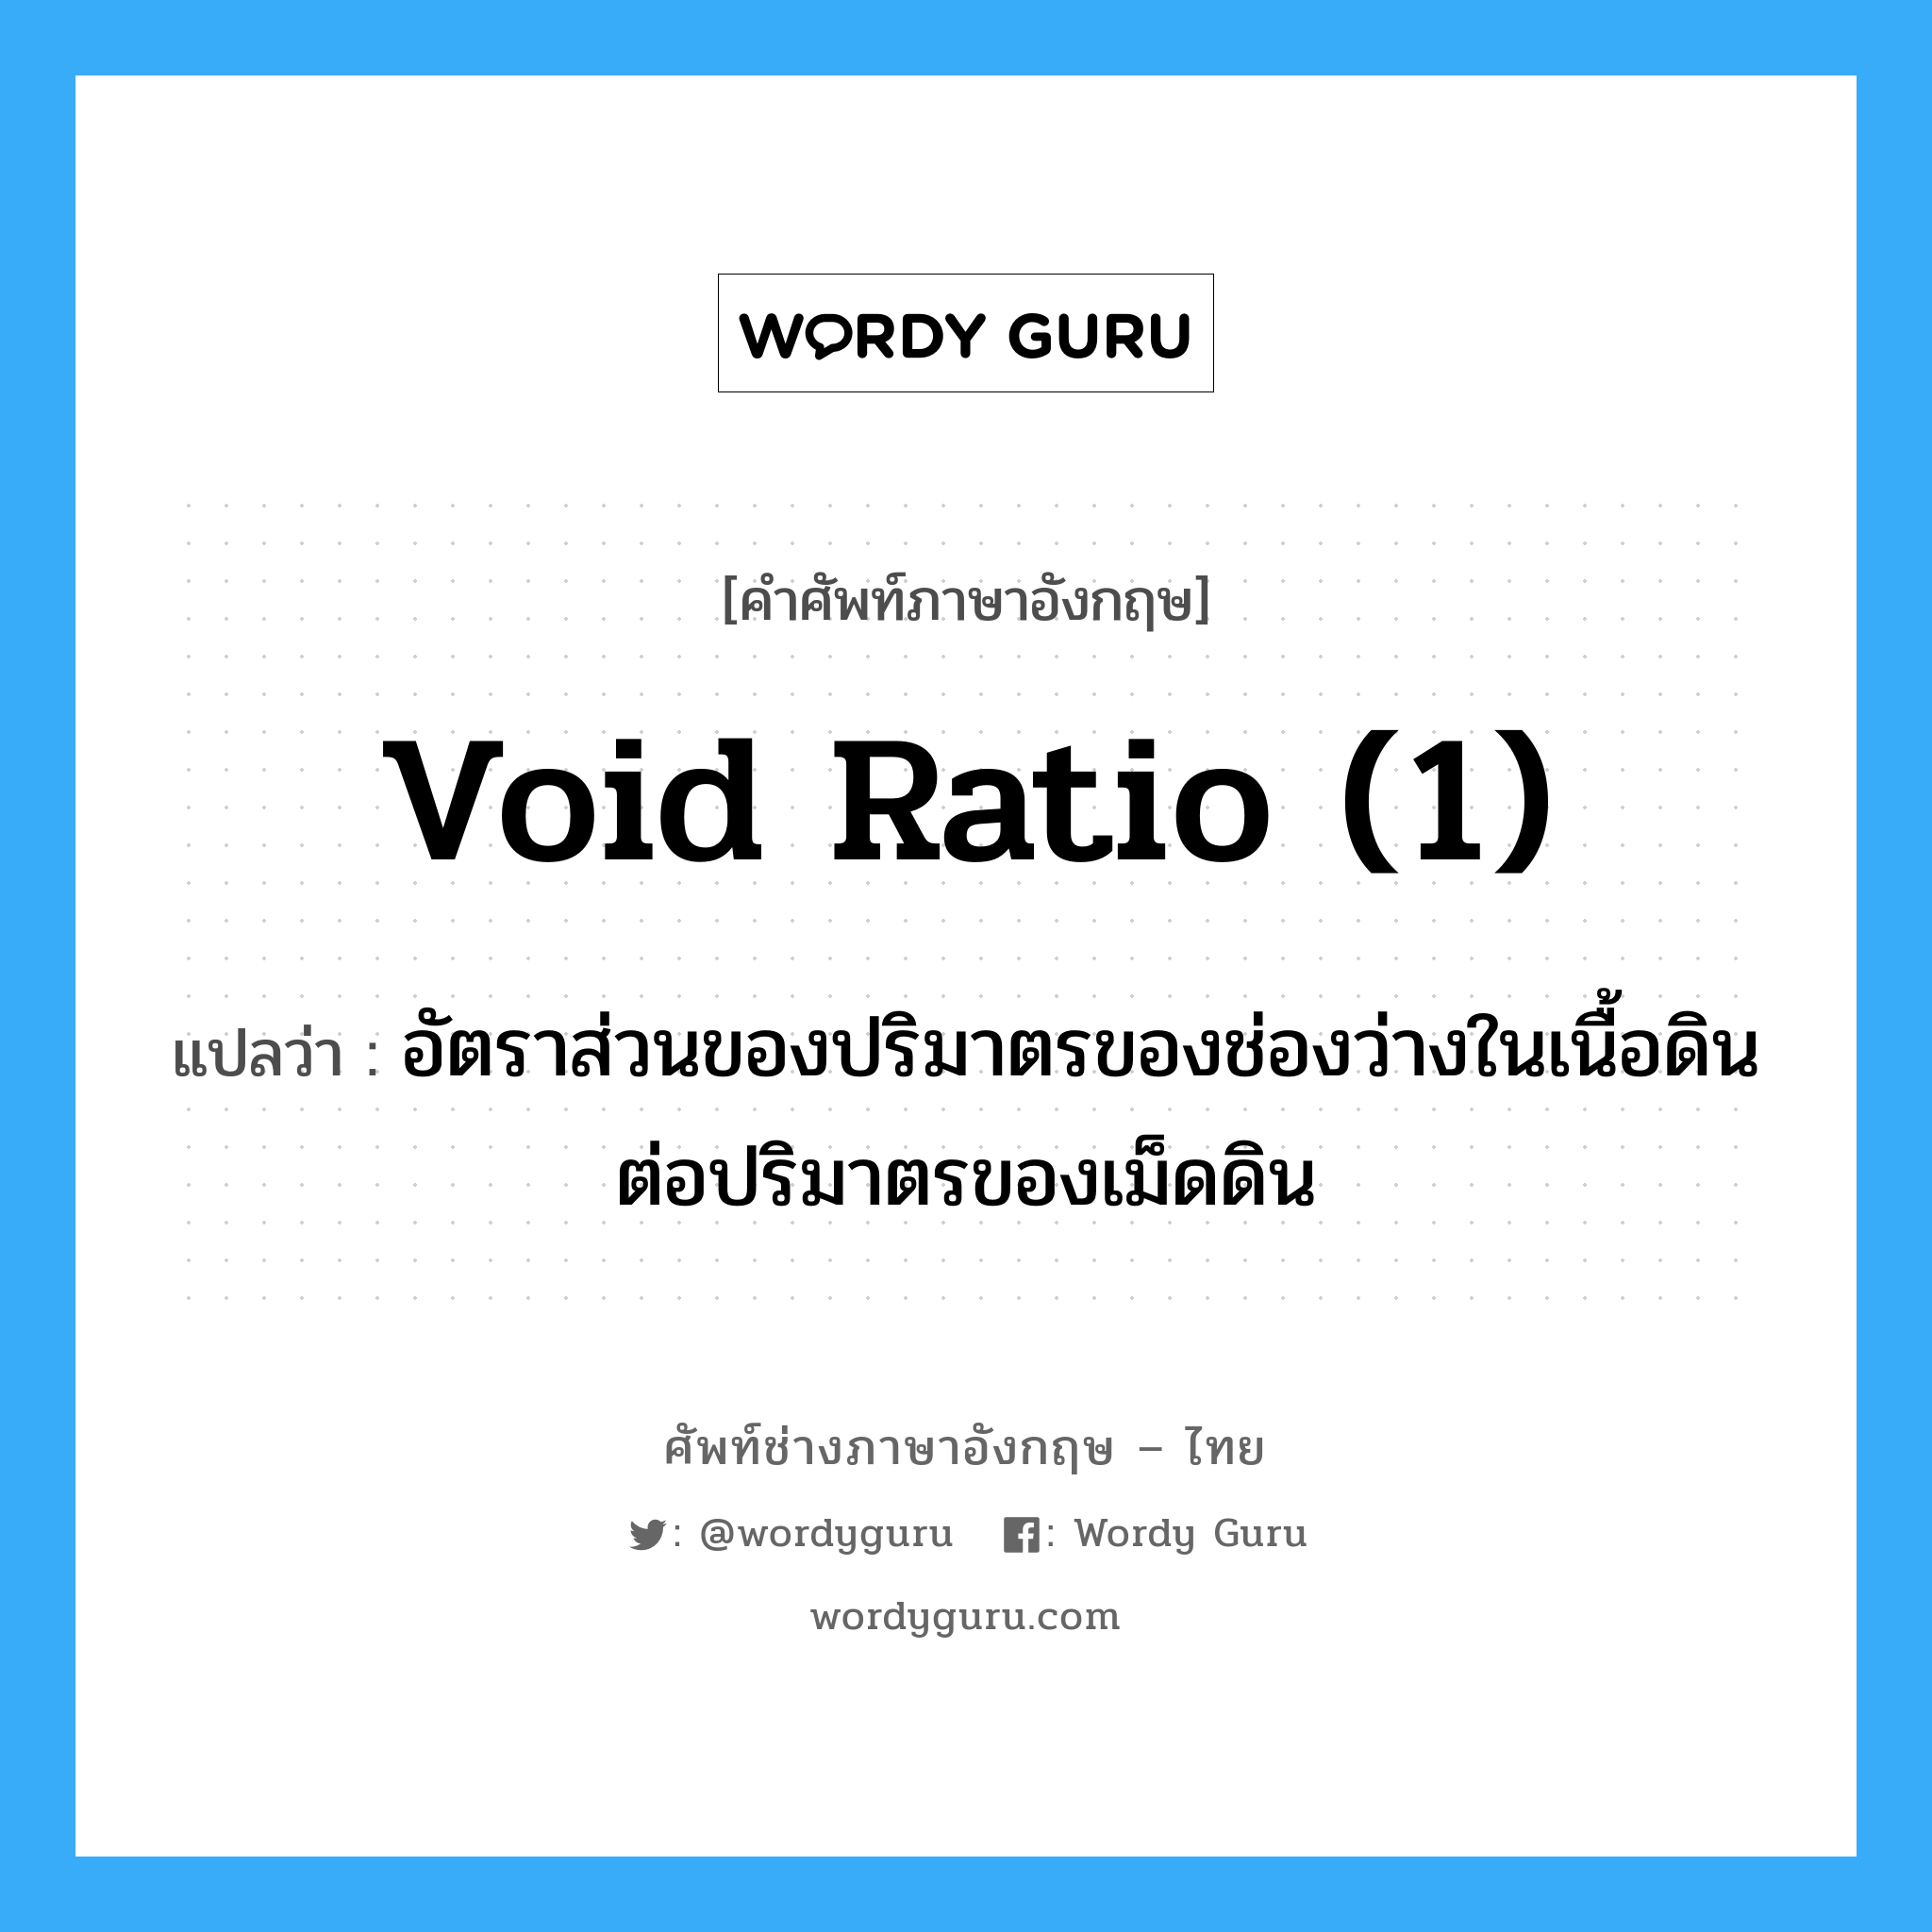 void ratio (1) แปลว่า?, คำศัพท์ช่างภาษาอังกฤษ - ไทย void ratio (1) คำศัพท์ภาษาอังกฤษ void ratio (1) แปลว่า อัตราส่วนของปริมาตรของช่องว่างในเนื้อดิน ต่อปริมาตรของเม็ดดิน